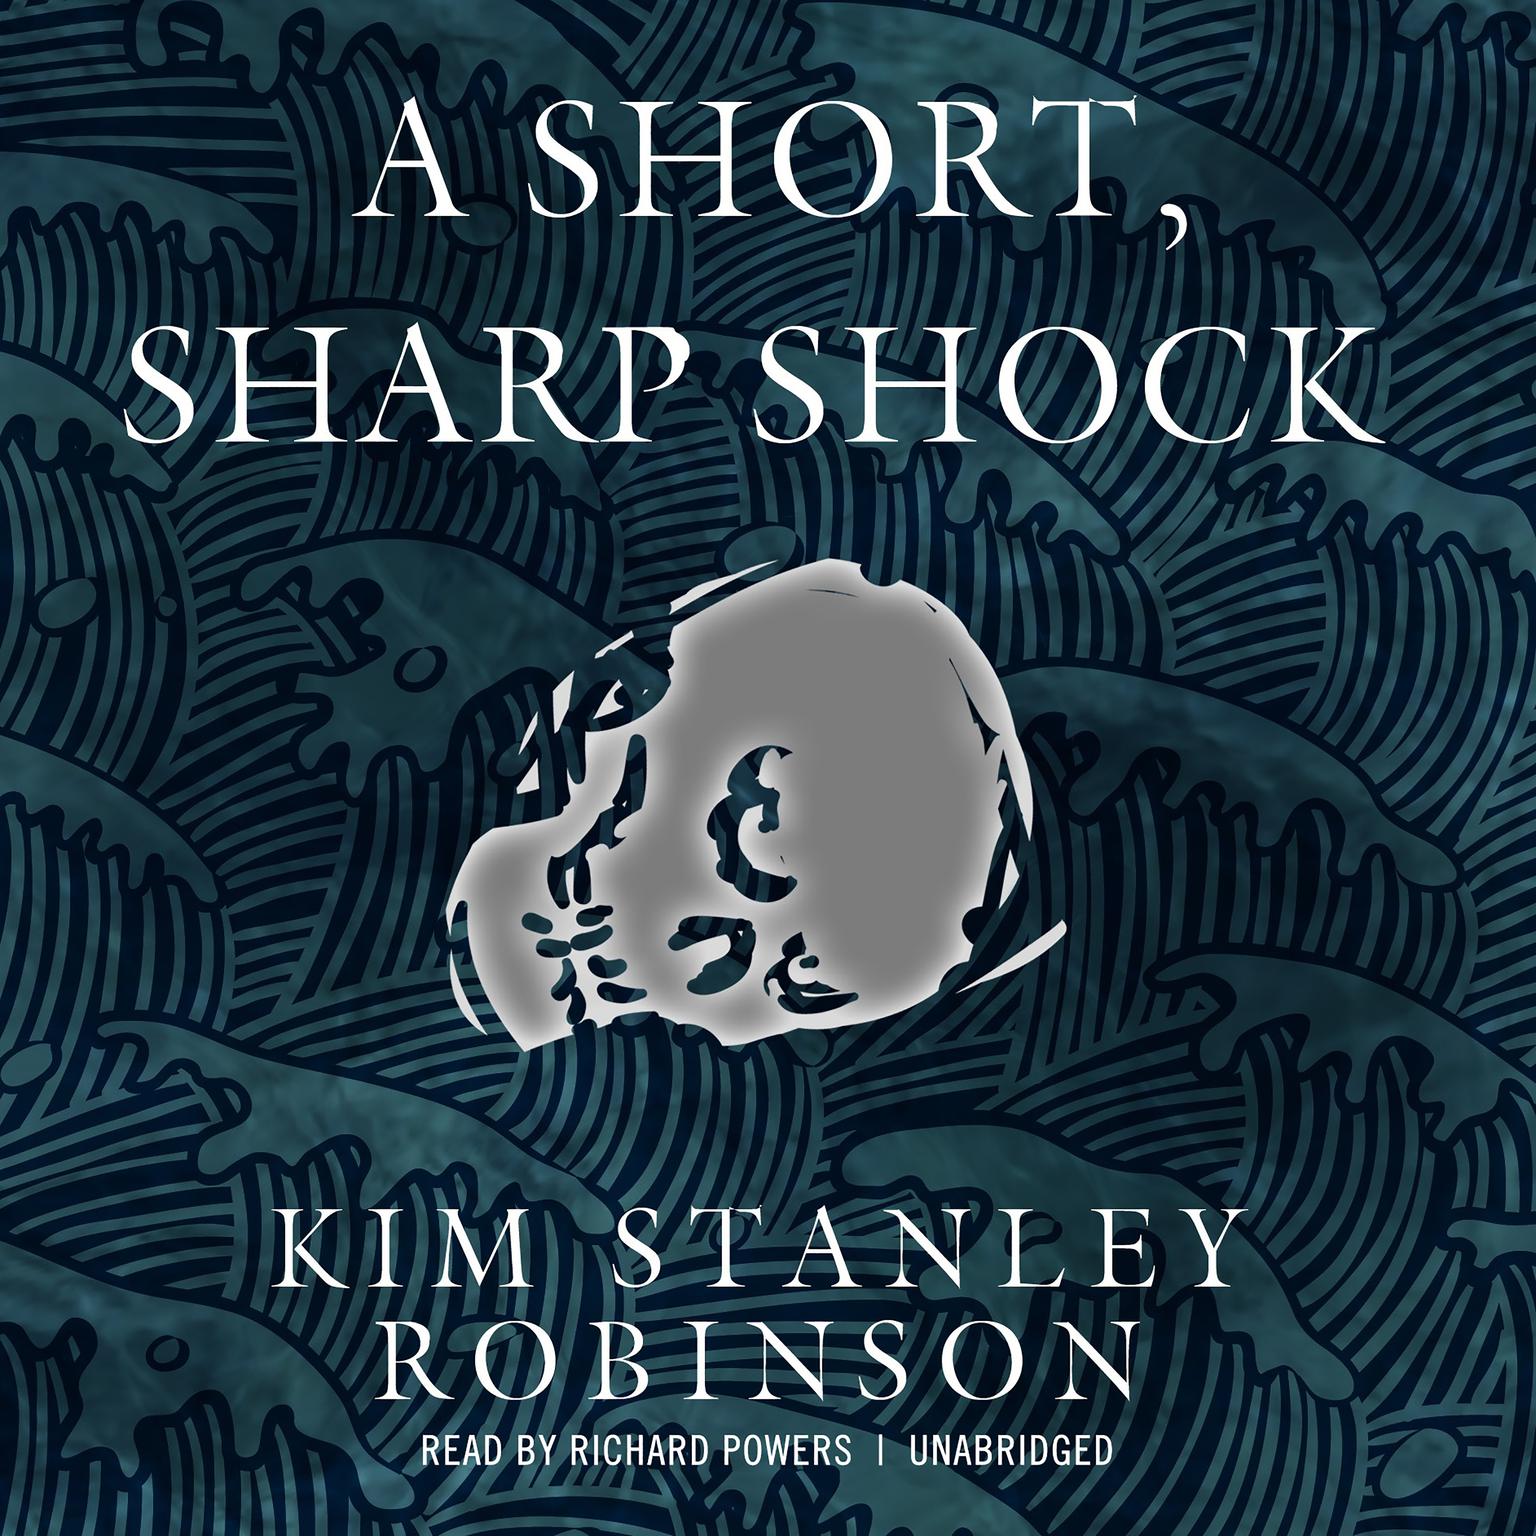 A Short, Sharp Shock Audiobook, by Kim Stanley Robinson